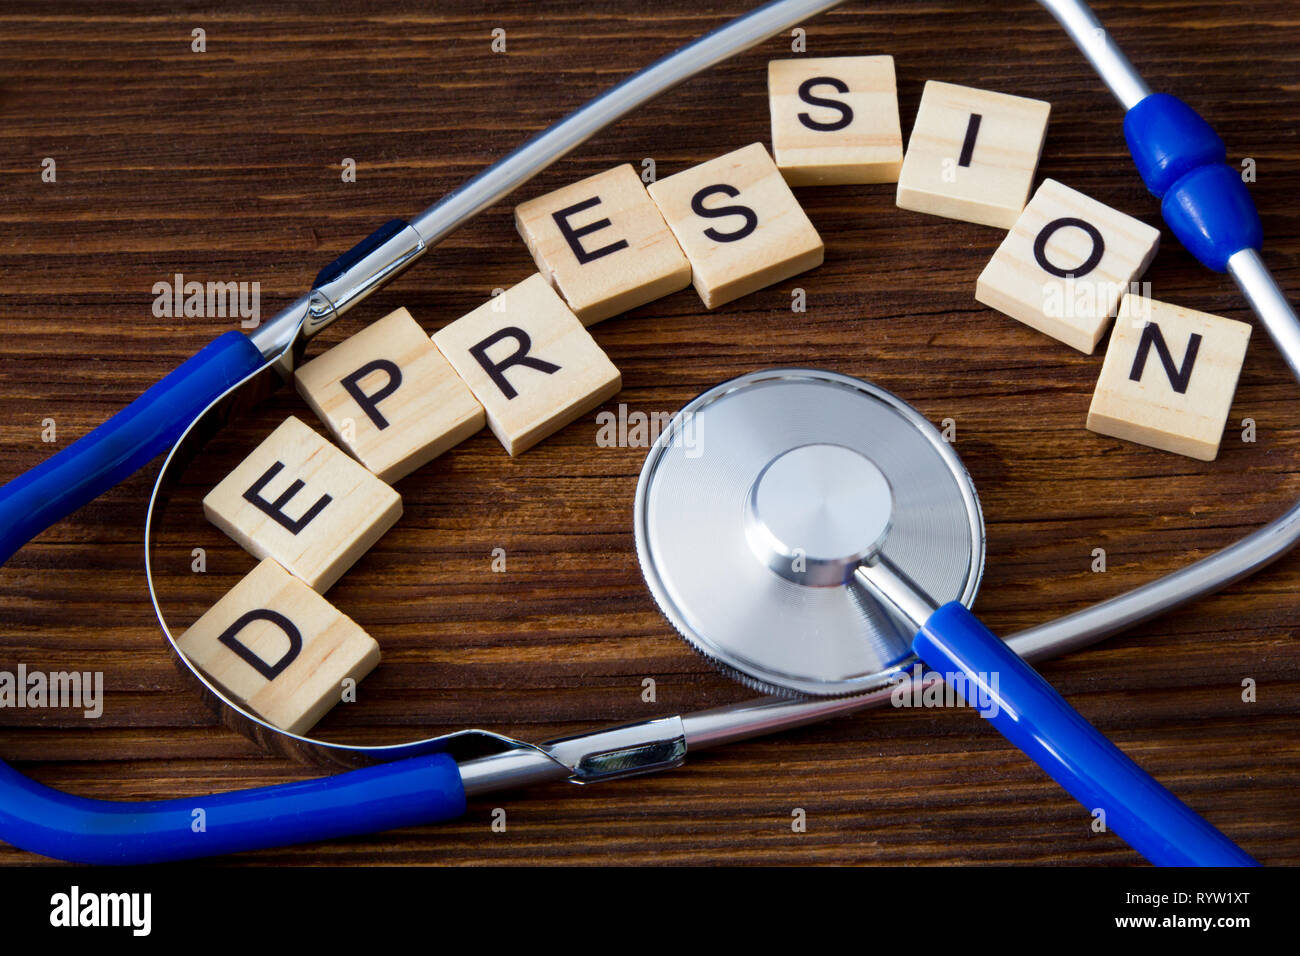 'Depression' word written on wooden blocks between stethoscope Stock Photo